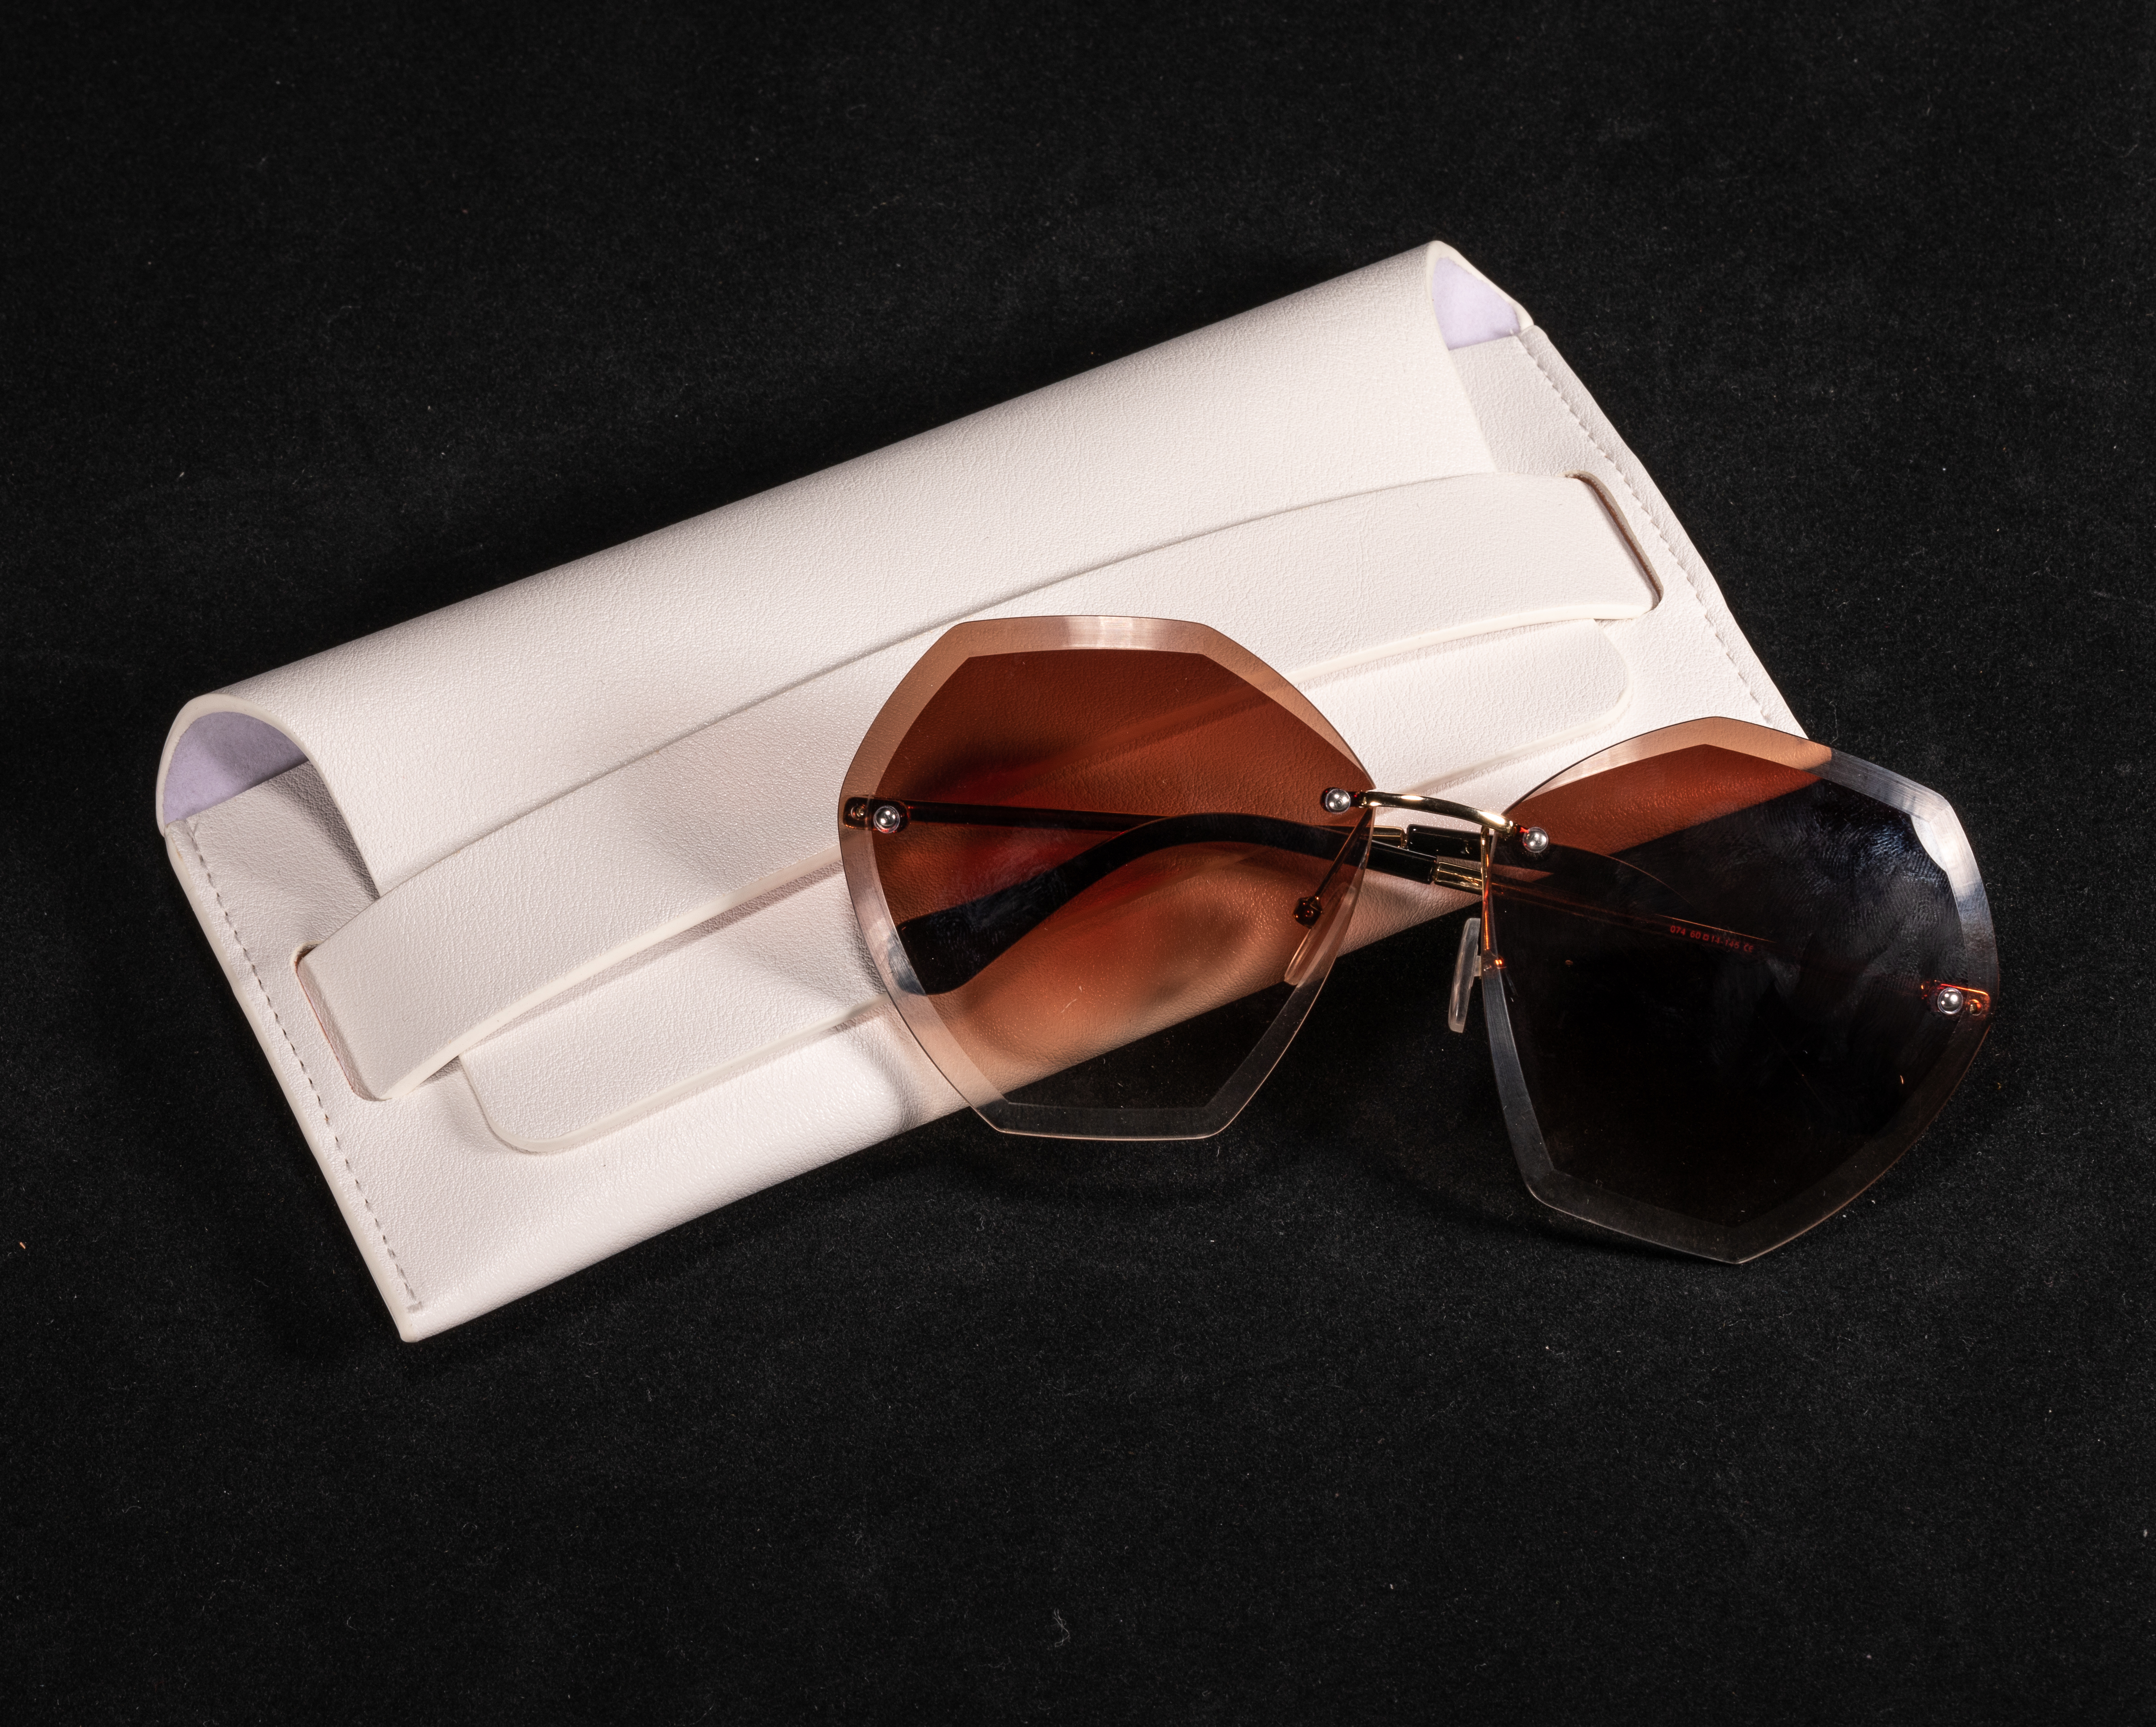 A White, Pocketed Eyeglass Case Shaped Like A Leather Bag